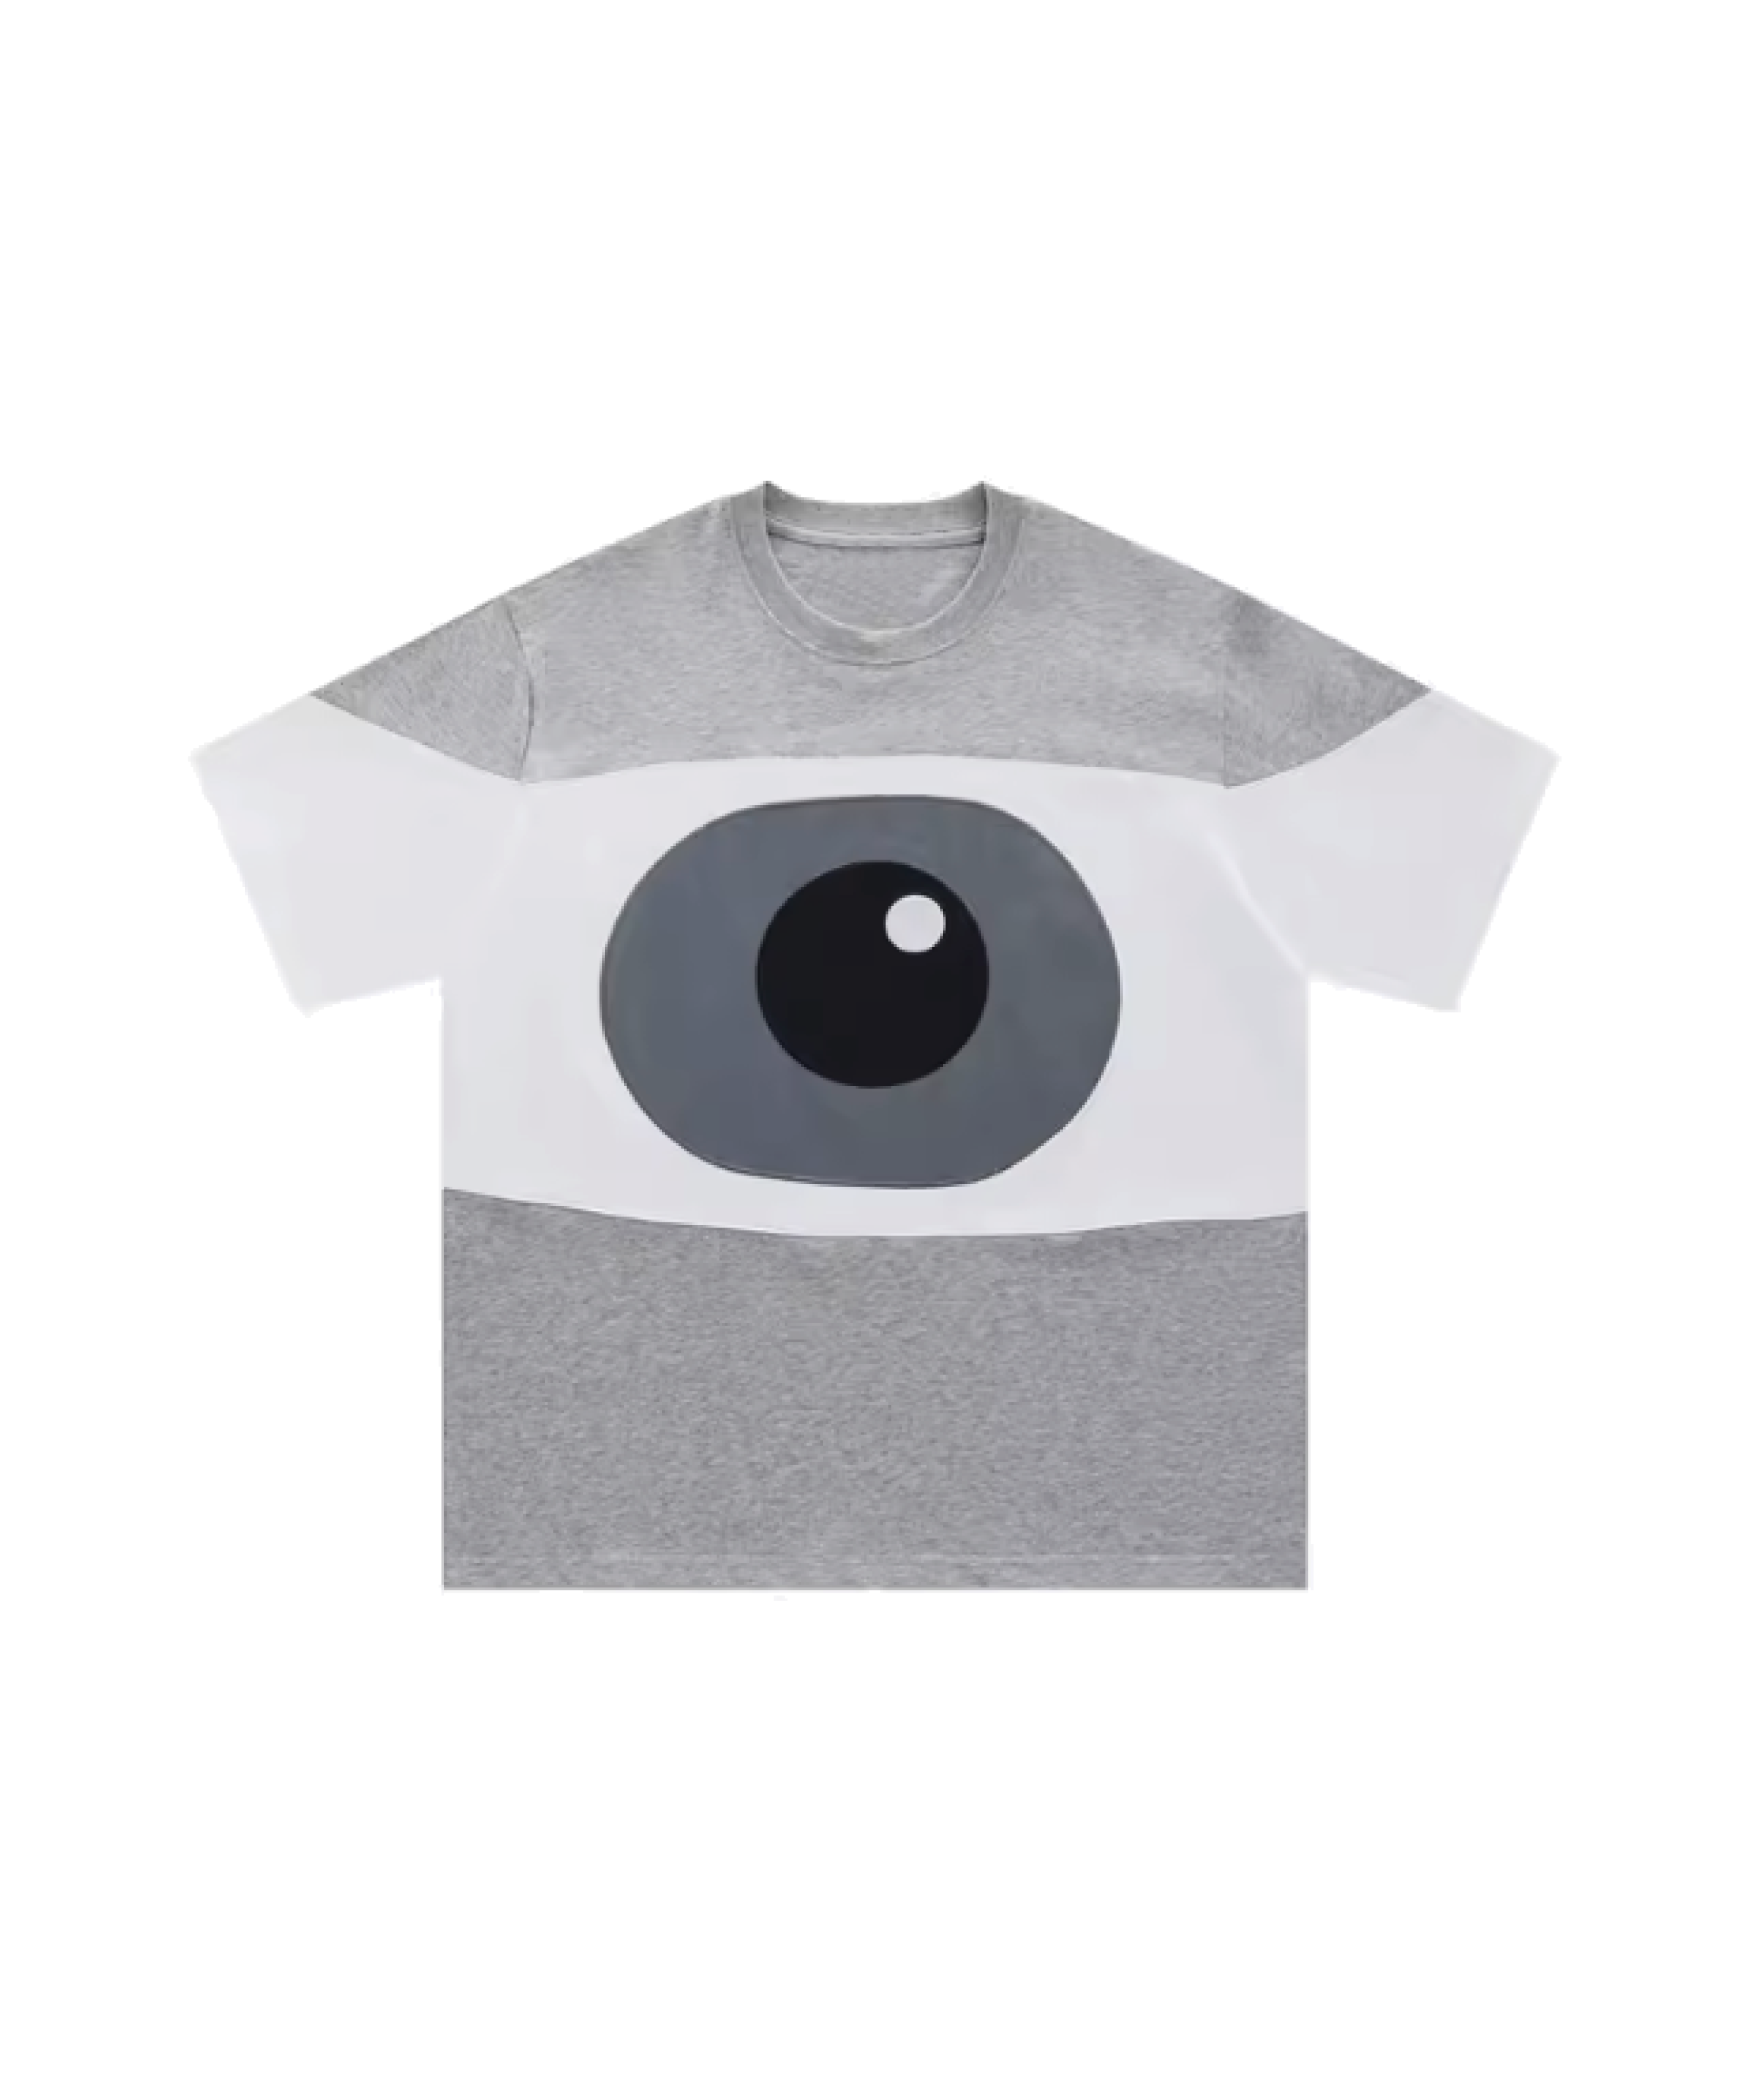 Eyes On Shirt